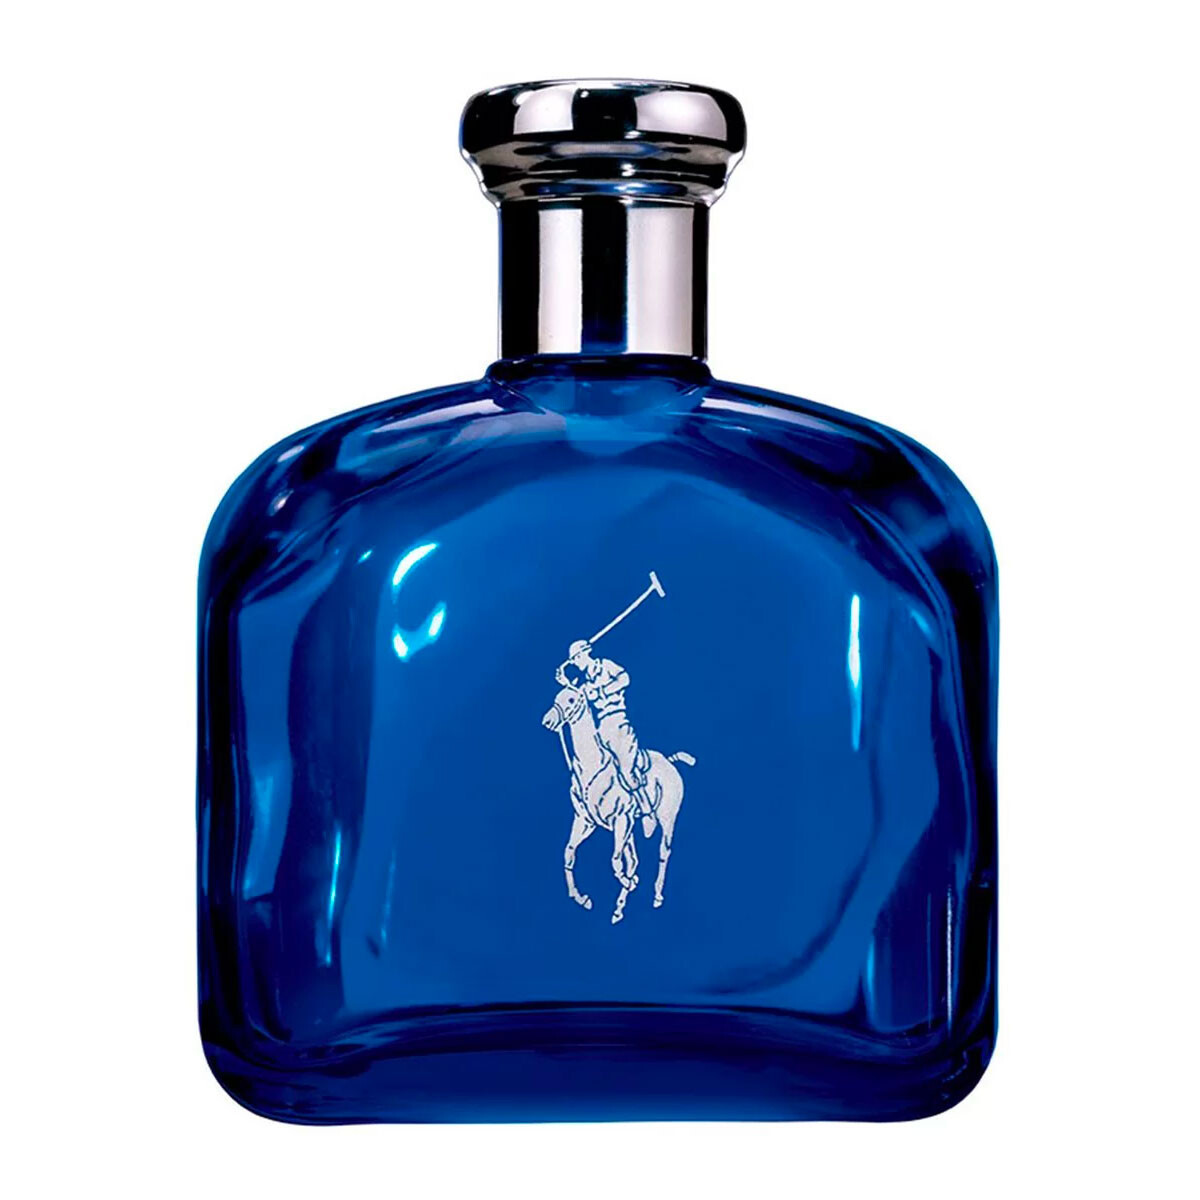 Perfume Ralph Lauren Polo Blue EDT - 125ml Ed.Limitada 